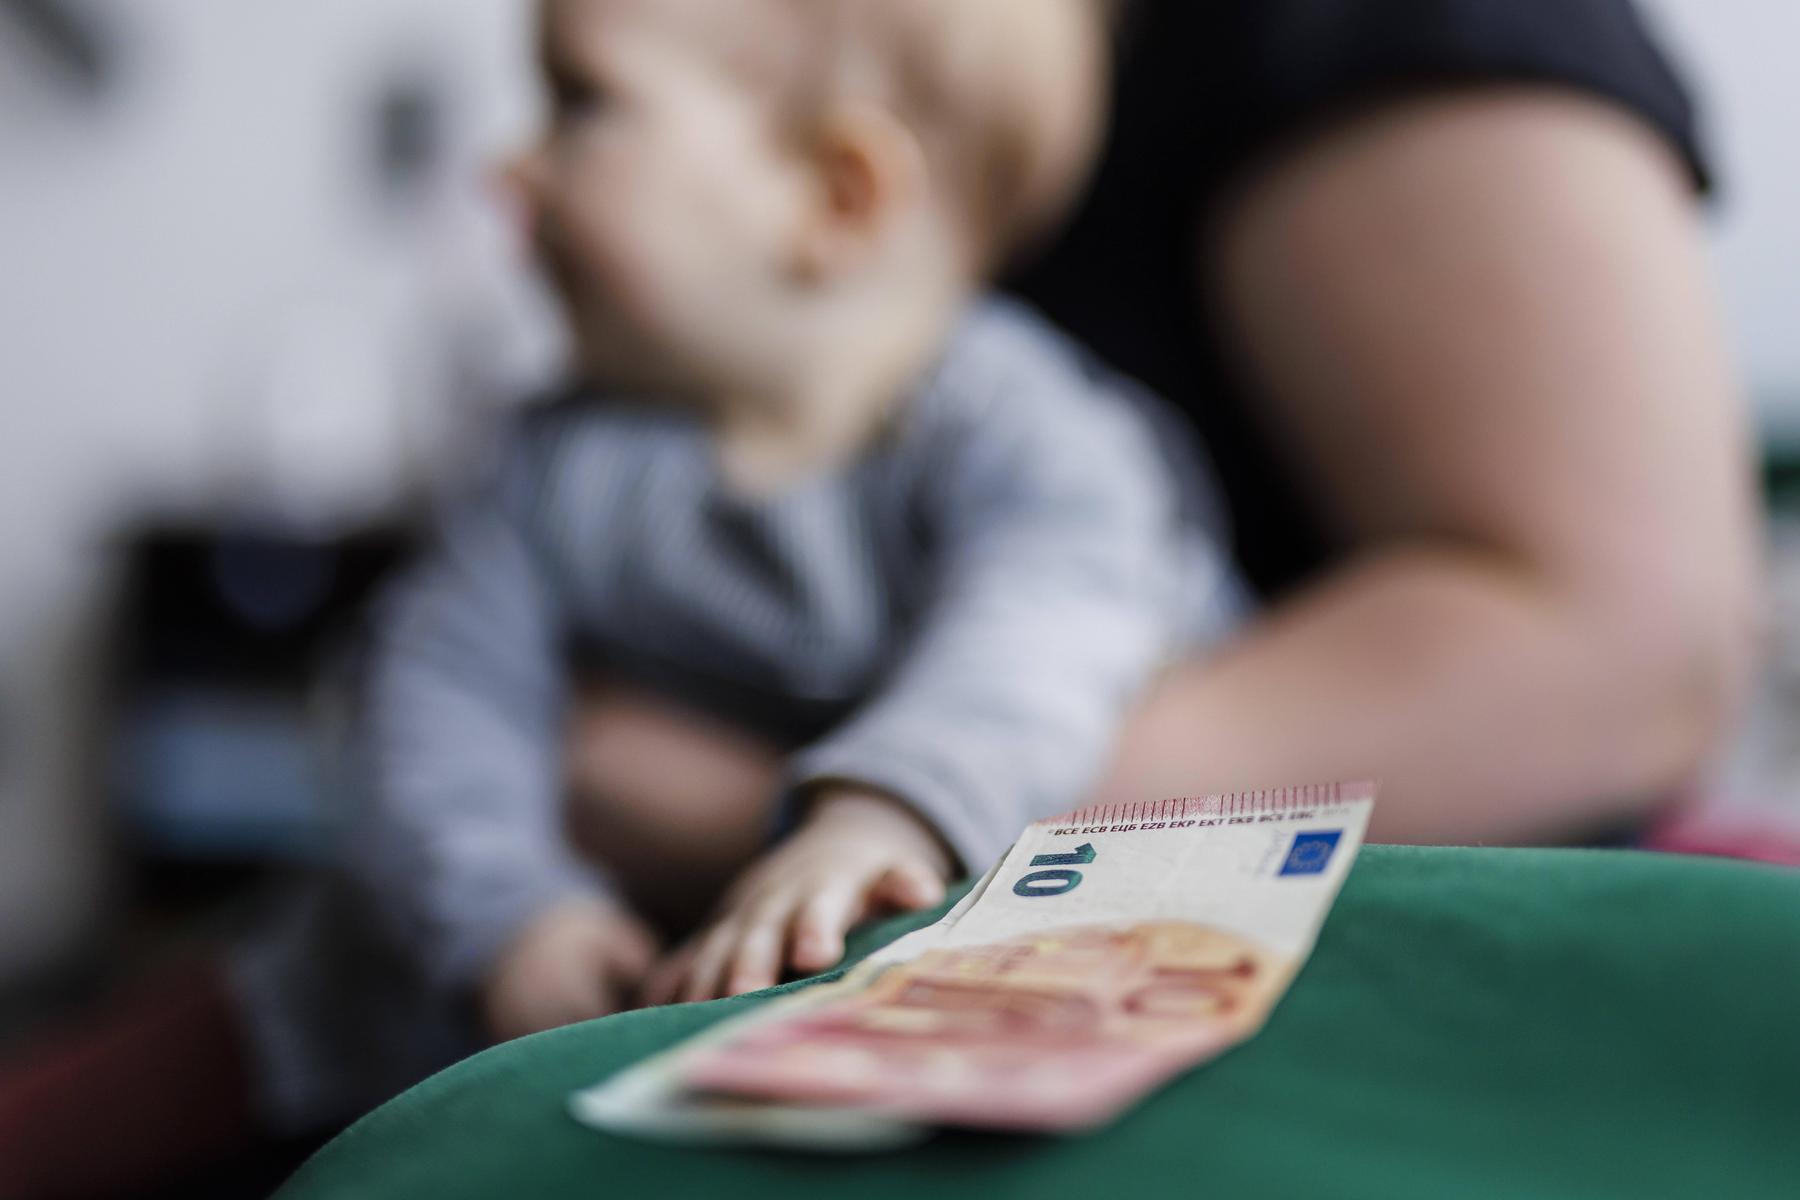 Heizung, Essen, Miete: Schuldnerberatungen warnen: Teuerung belastet Familien enorm